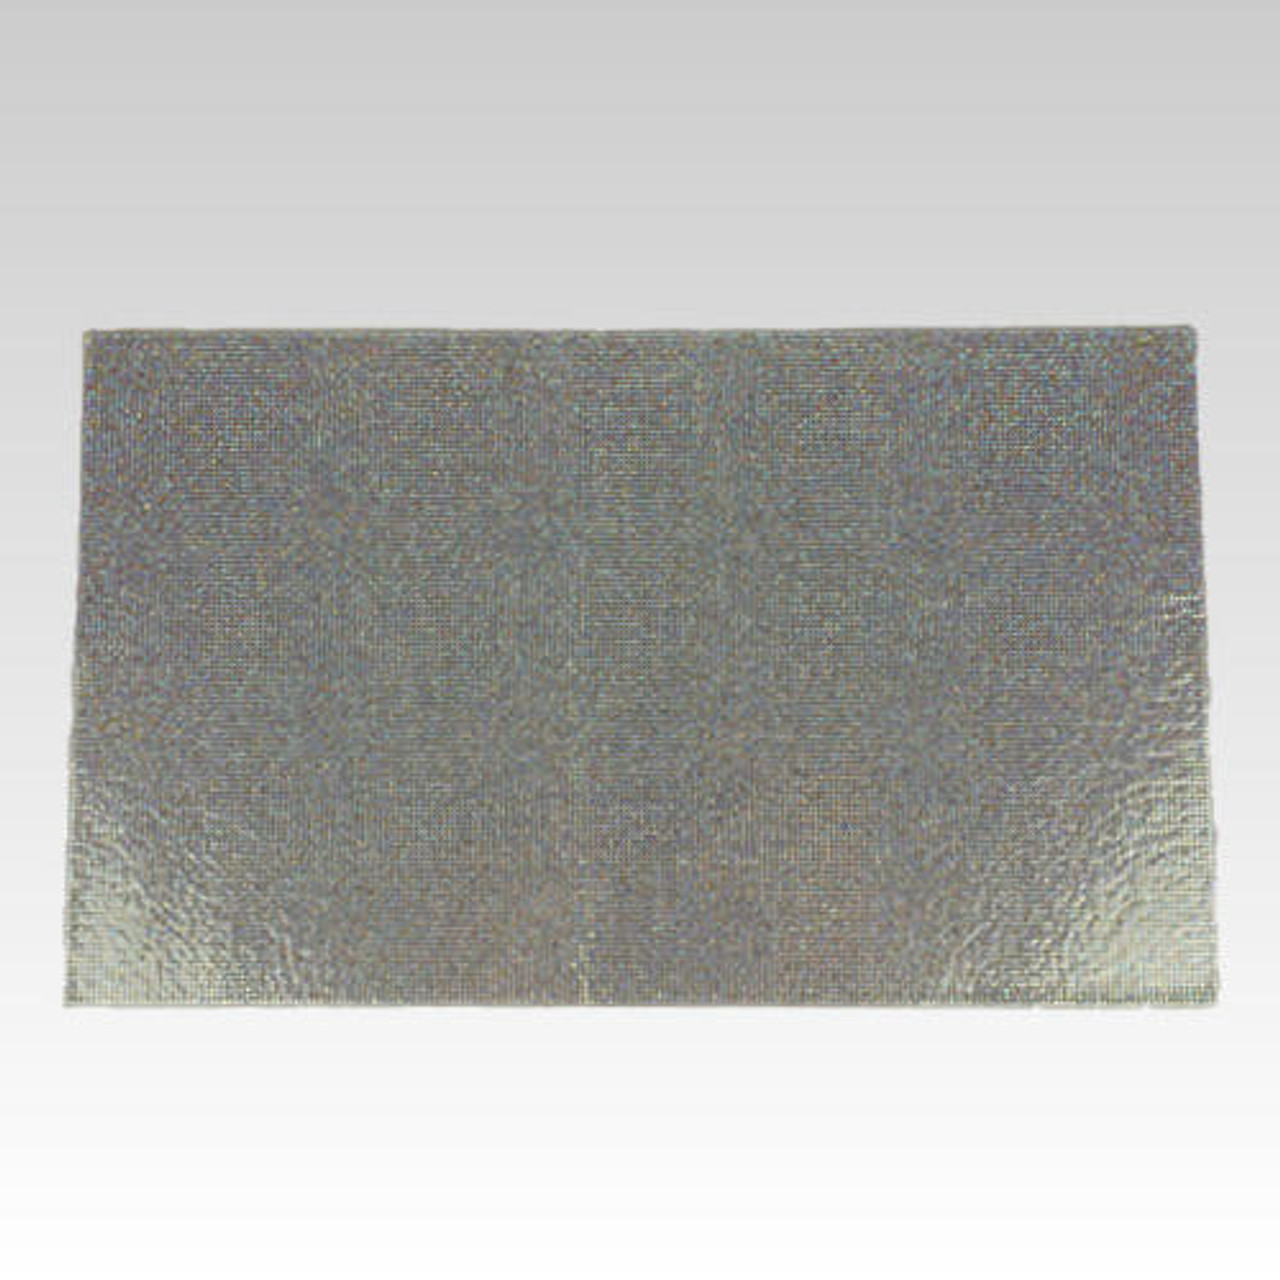 21x10.5 Black Diamond Rhinestone Adhesive Sheet